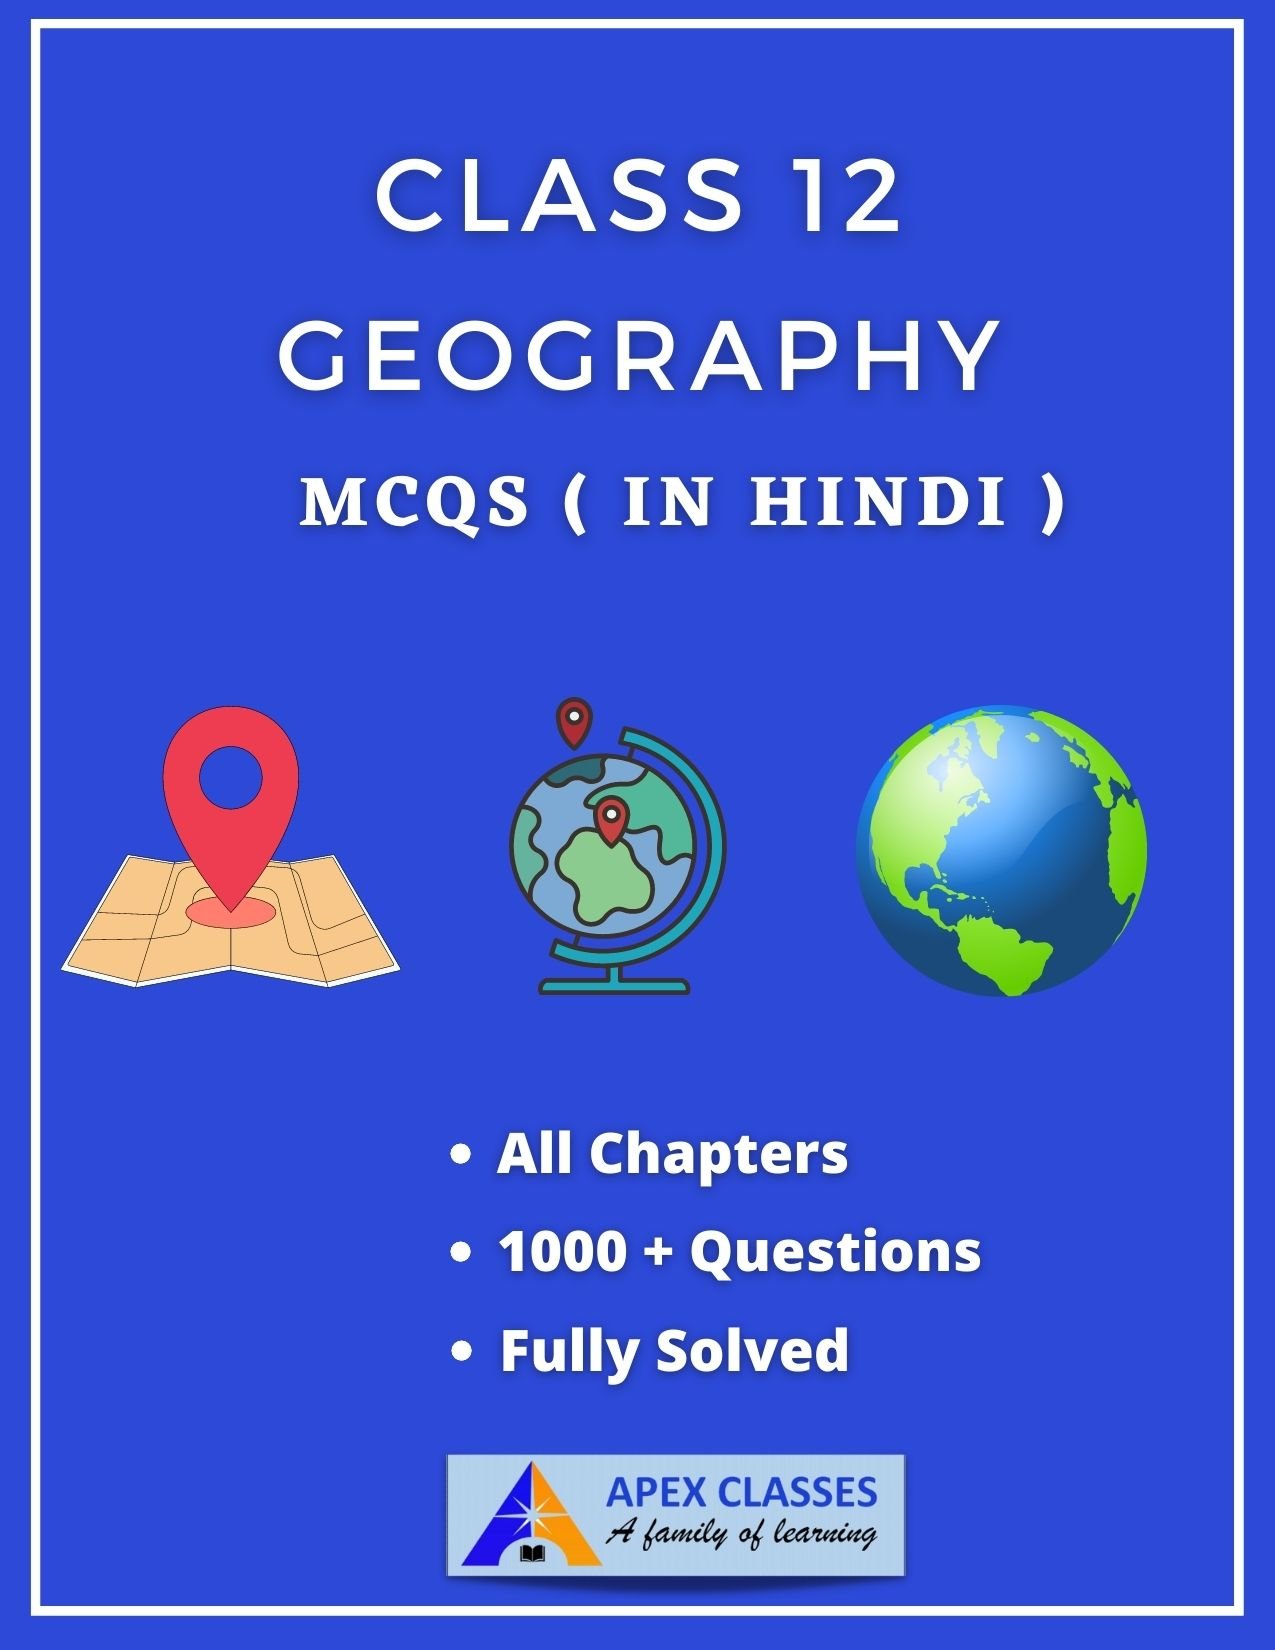 Class 12 Geography MCQs pdf in Hindi